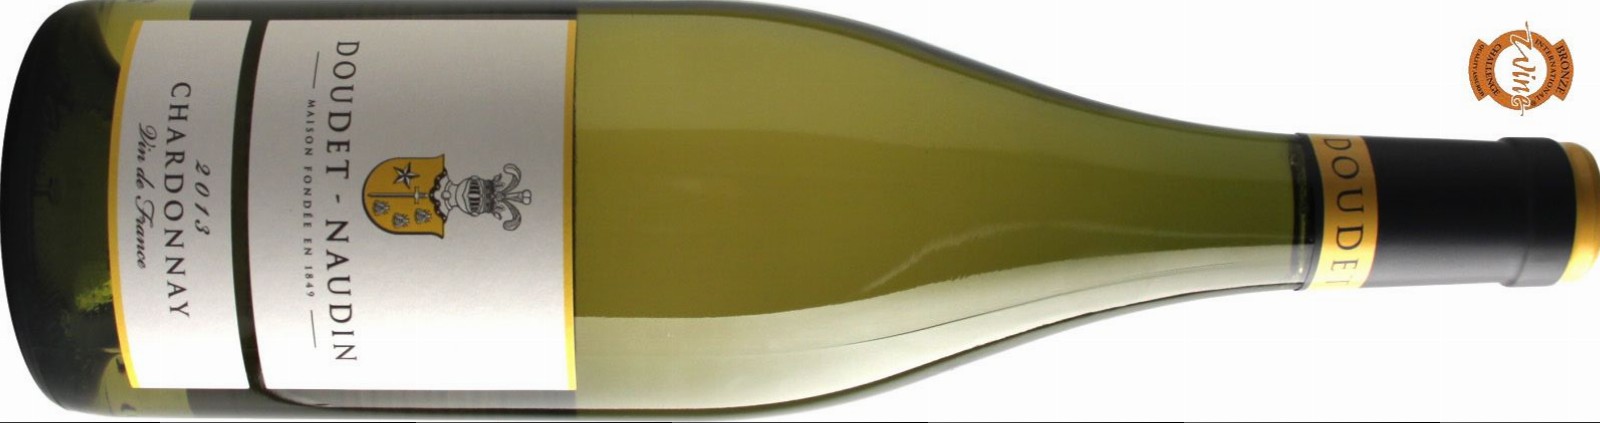 Domaine Doudet Naudin Chardonnay 2013